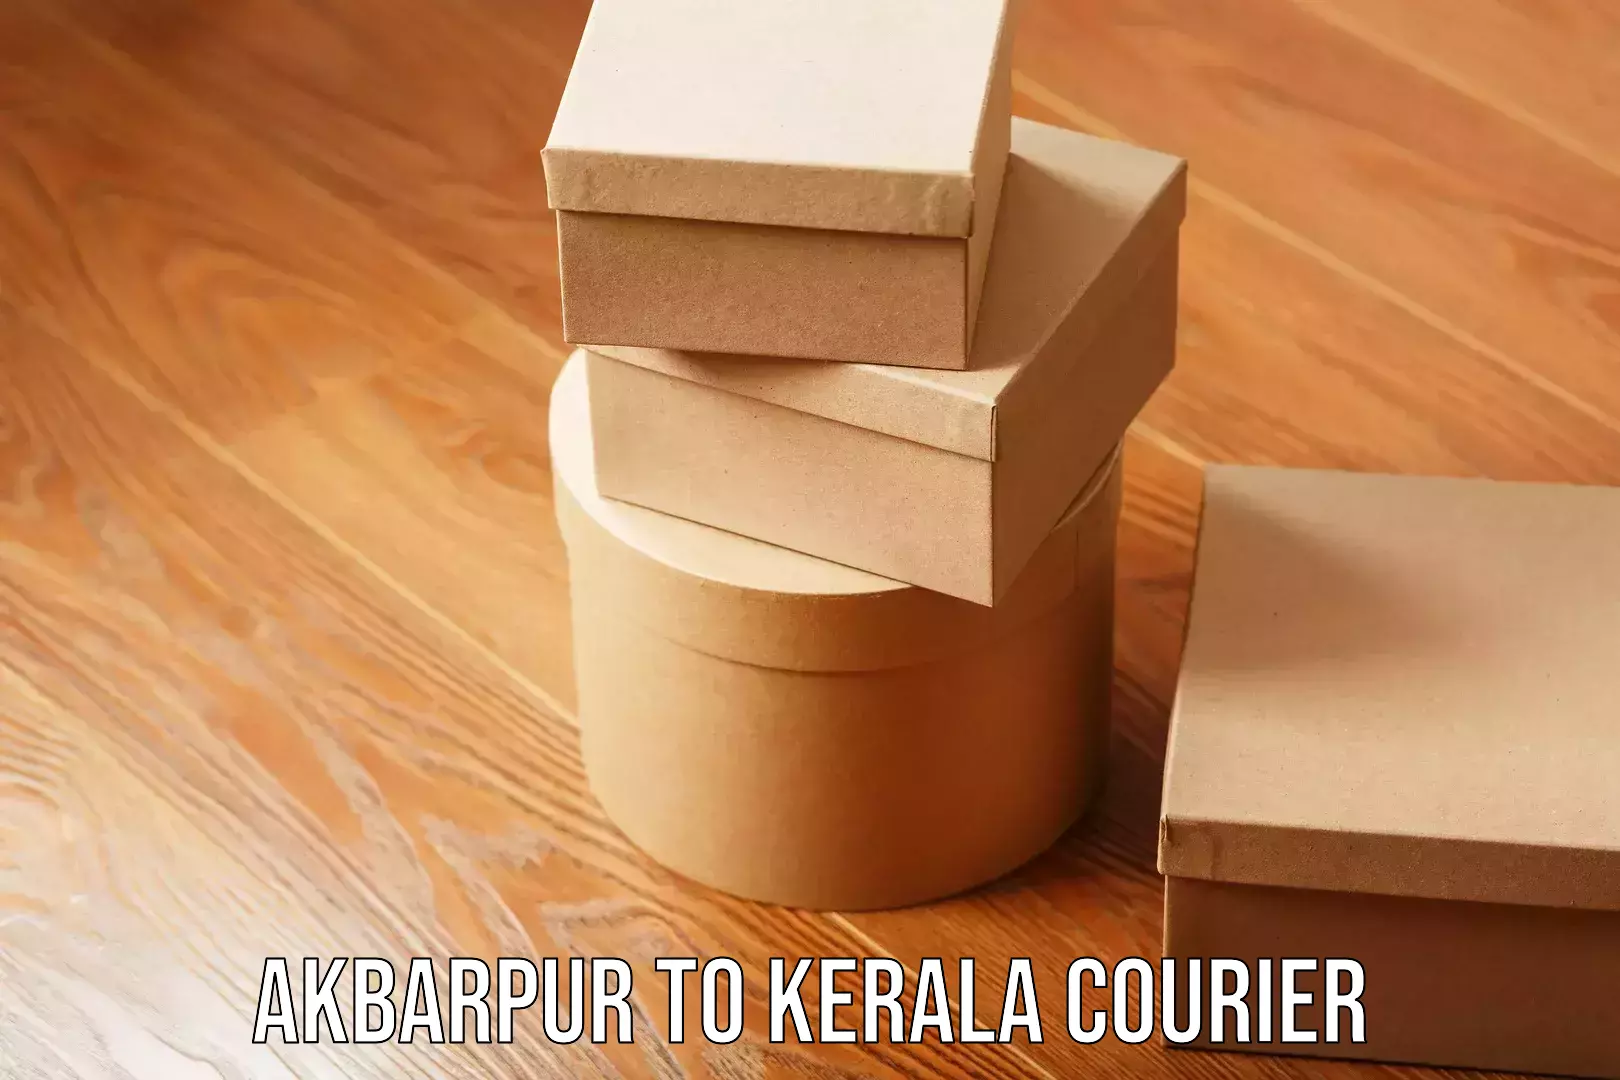 Advanced delivery network Akbarpur to Kerala